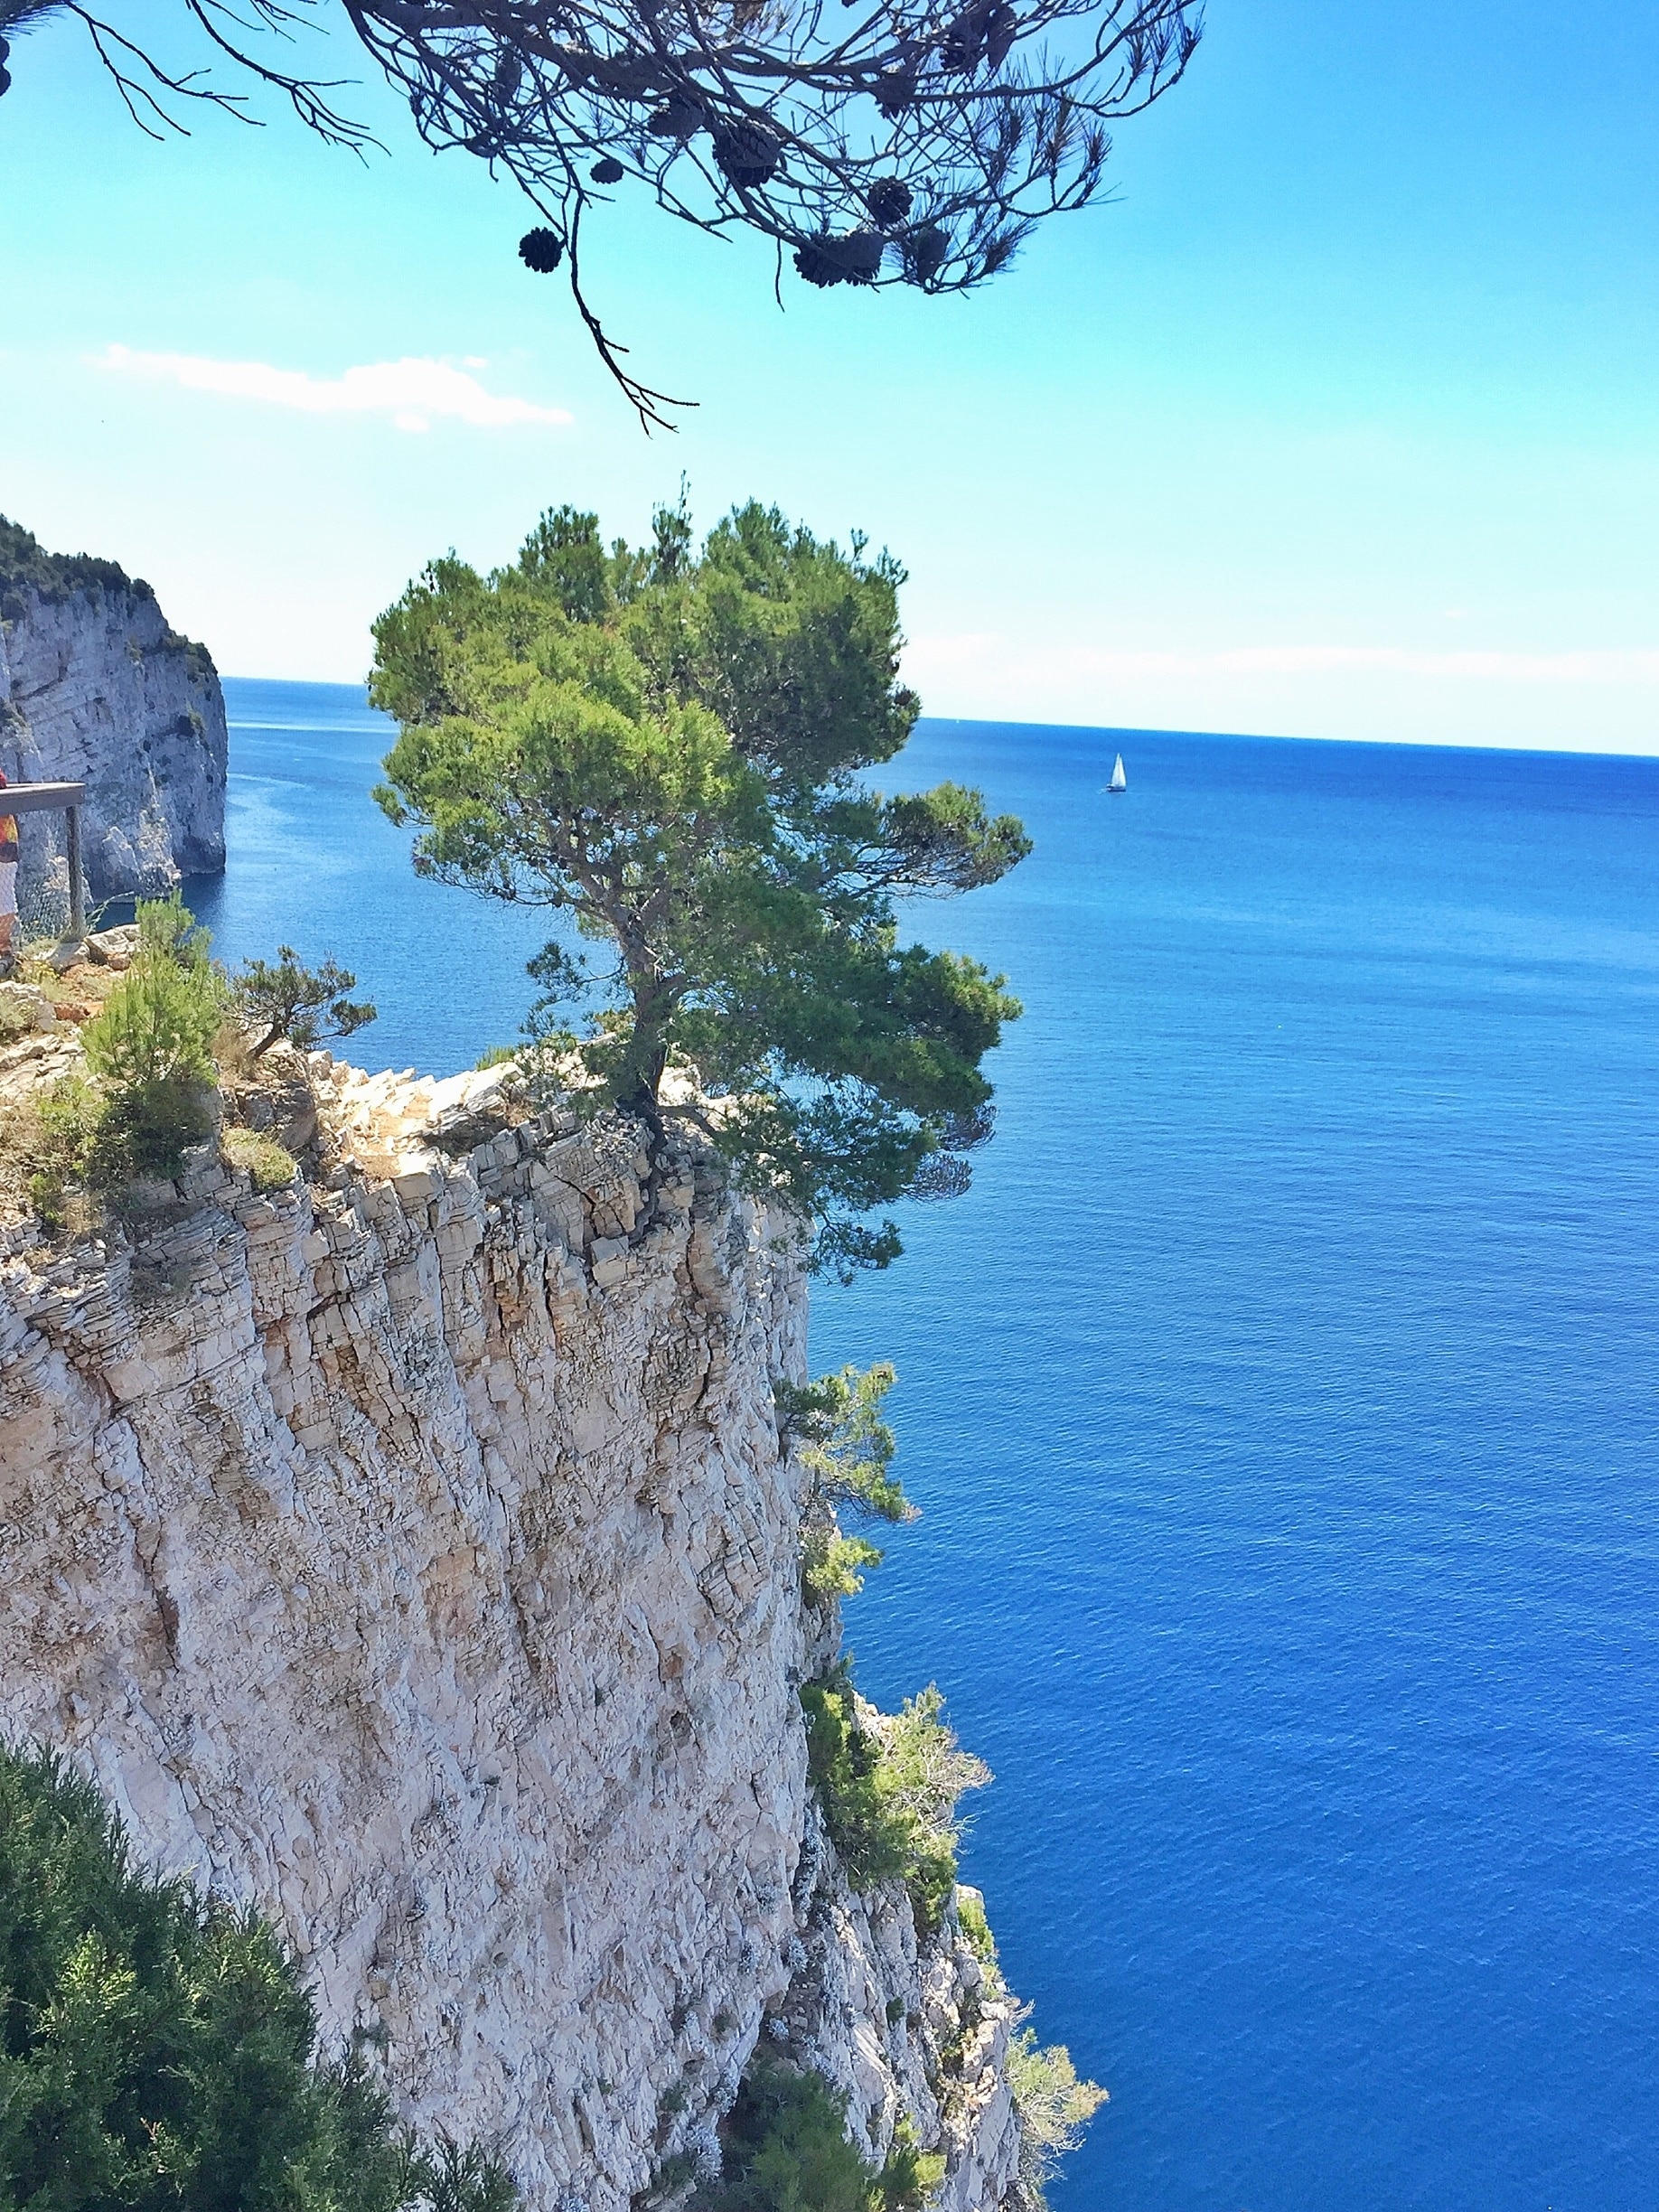 #croatia #sea #cliffs
2017